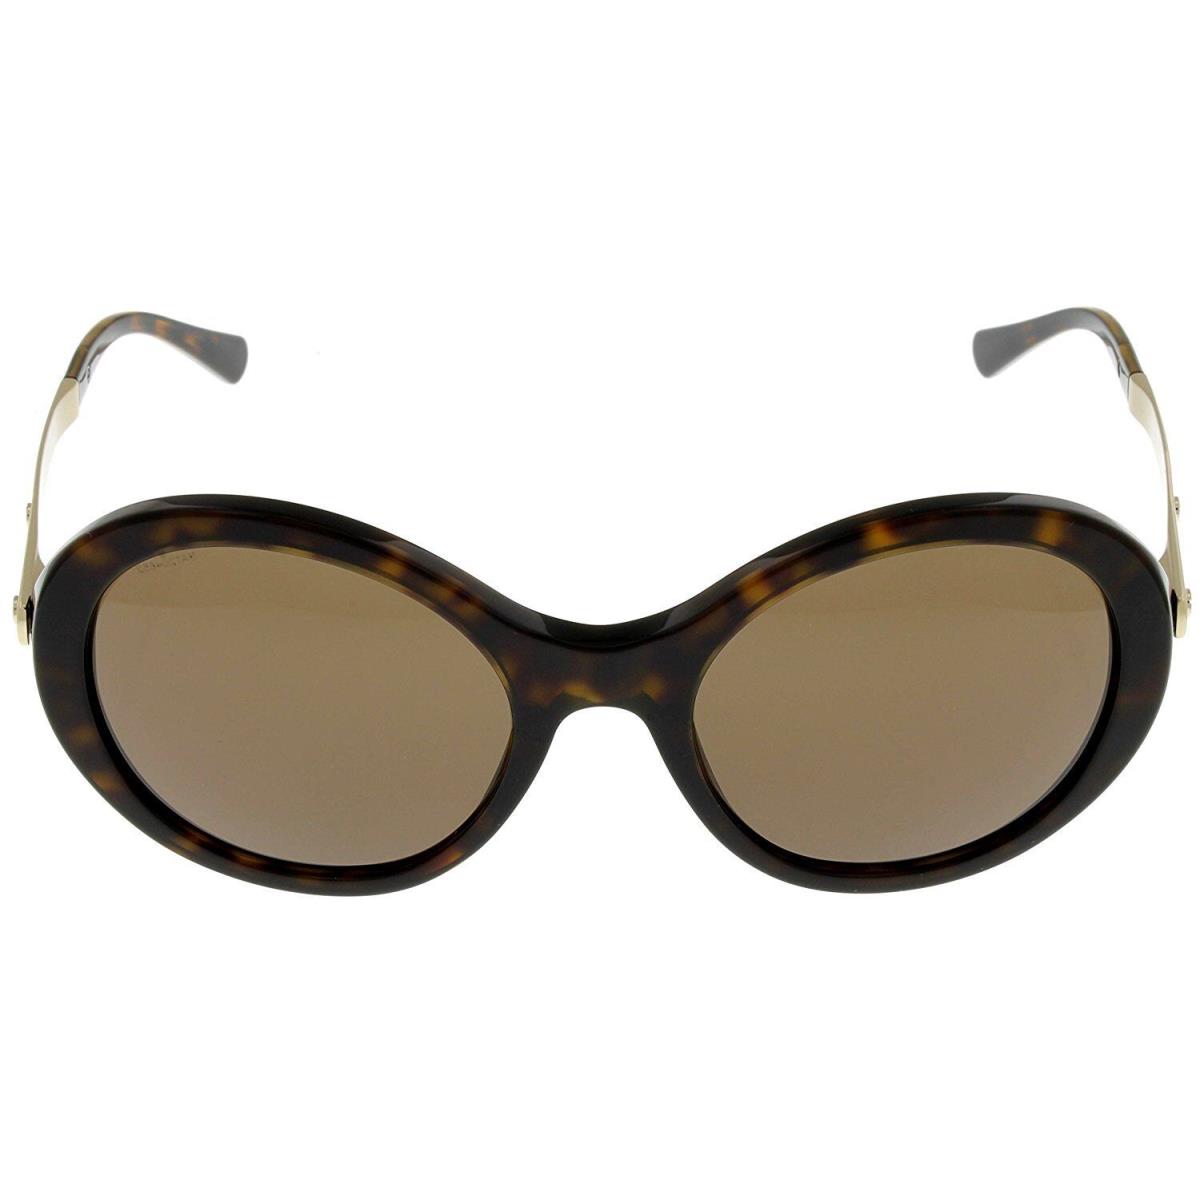 Giorgio Armani Sunglasses Women Brown Havana AR8012 502673 Round Fashion